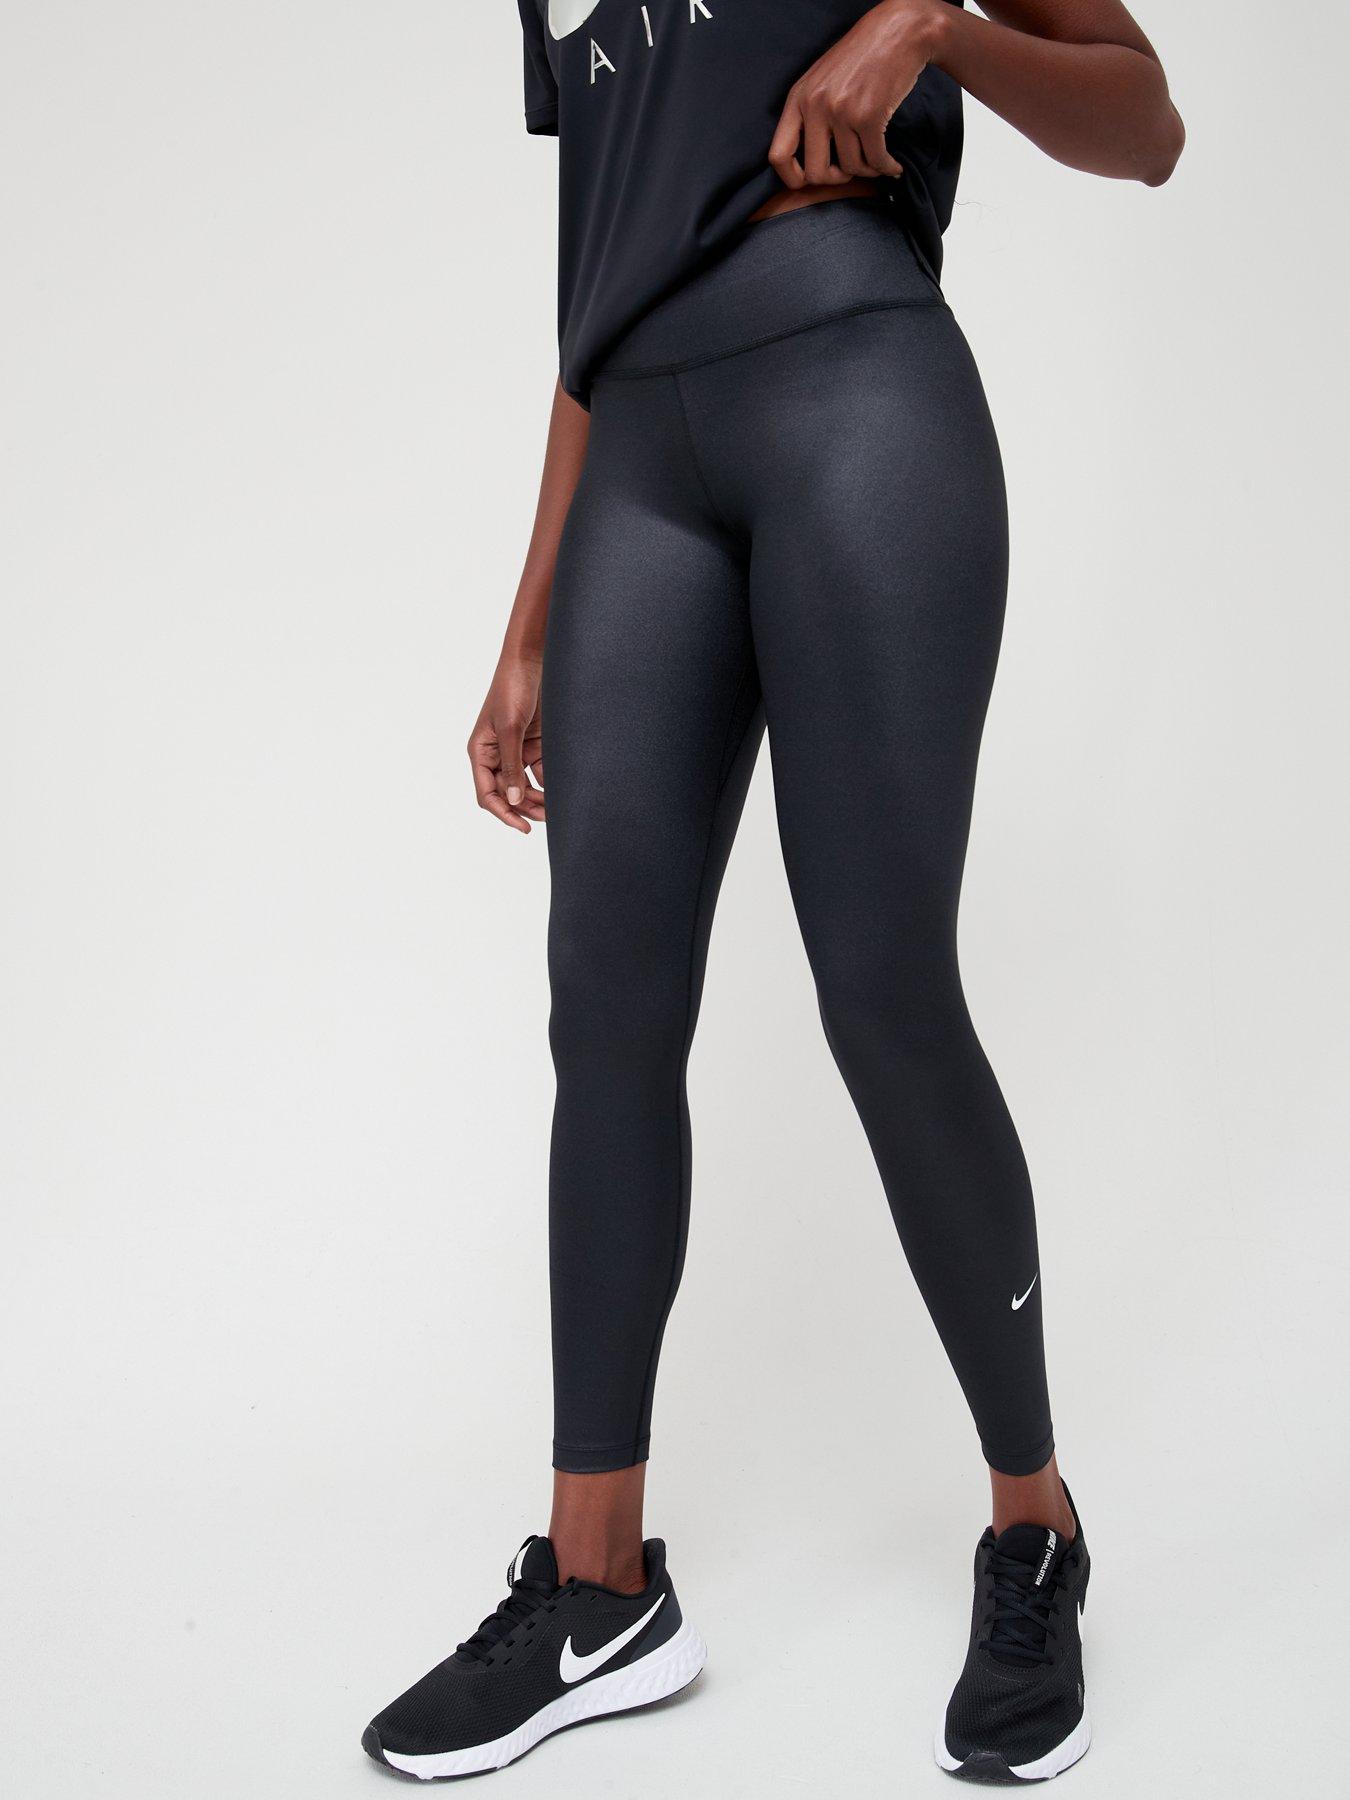 $69 Calvin Klein Women's Black Faux Leather Front Leggings Pants Size XL